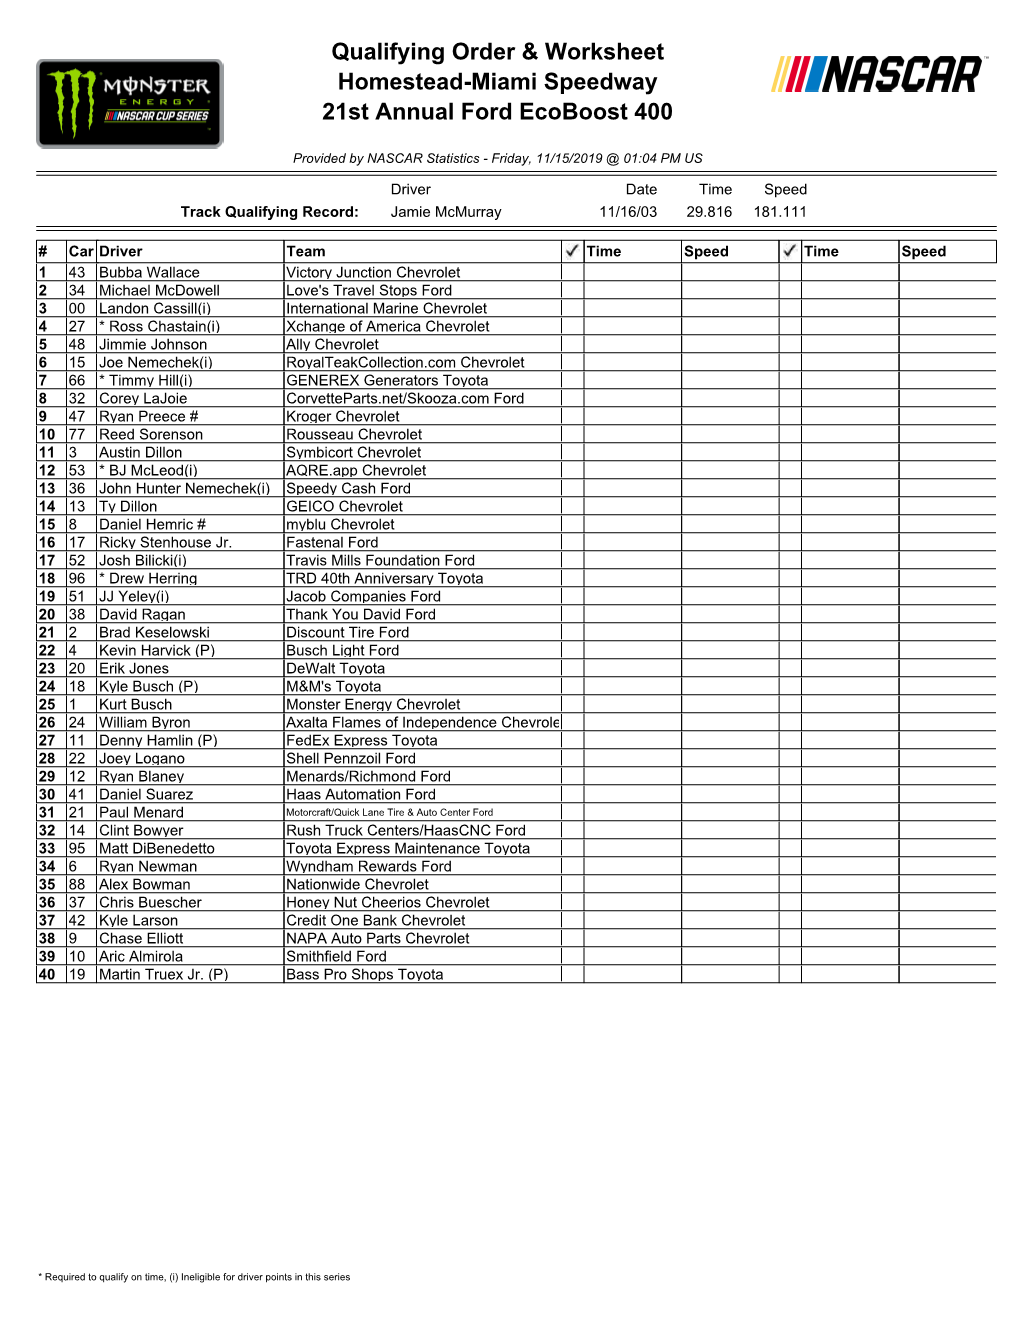 Qualifying Order & Worksheet Homestead-Miami Speedway 21St